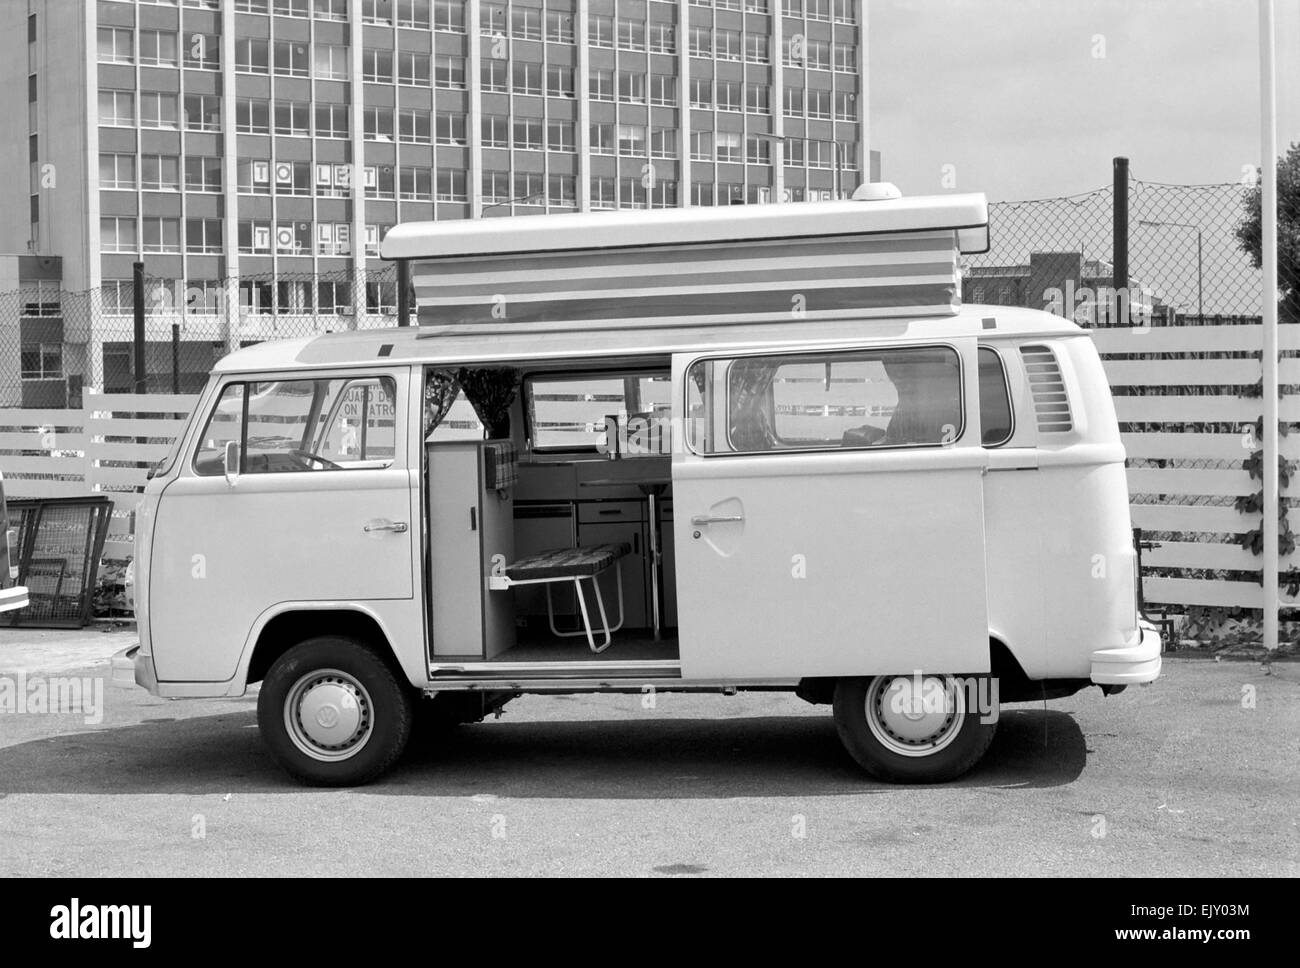 Devon Volkswagen Moonraker Motor Caravan. Août 1978 78-3944-005 *** *** Local Caption planman - - 03/02/2010 Banque D'Images